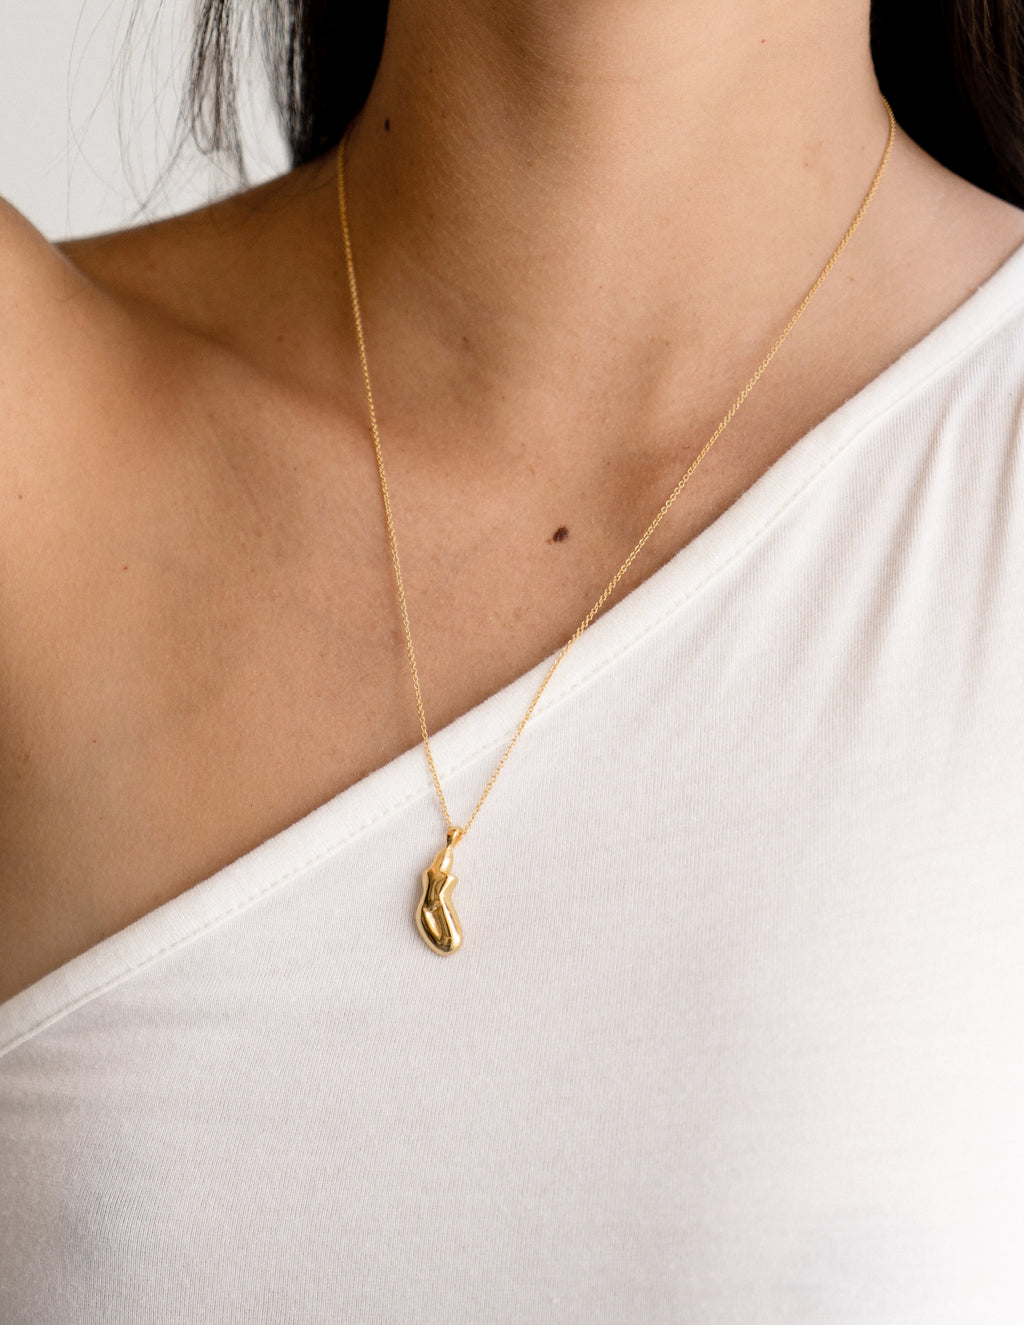 Petite Form Necklace – Cadette Jewelry